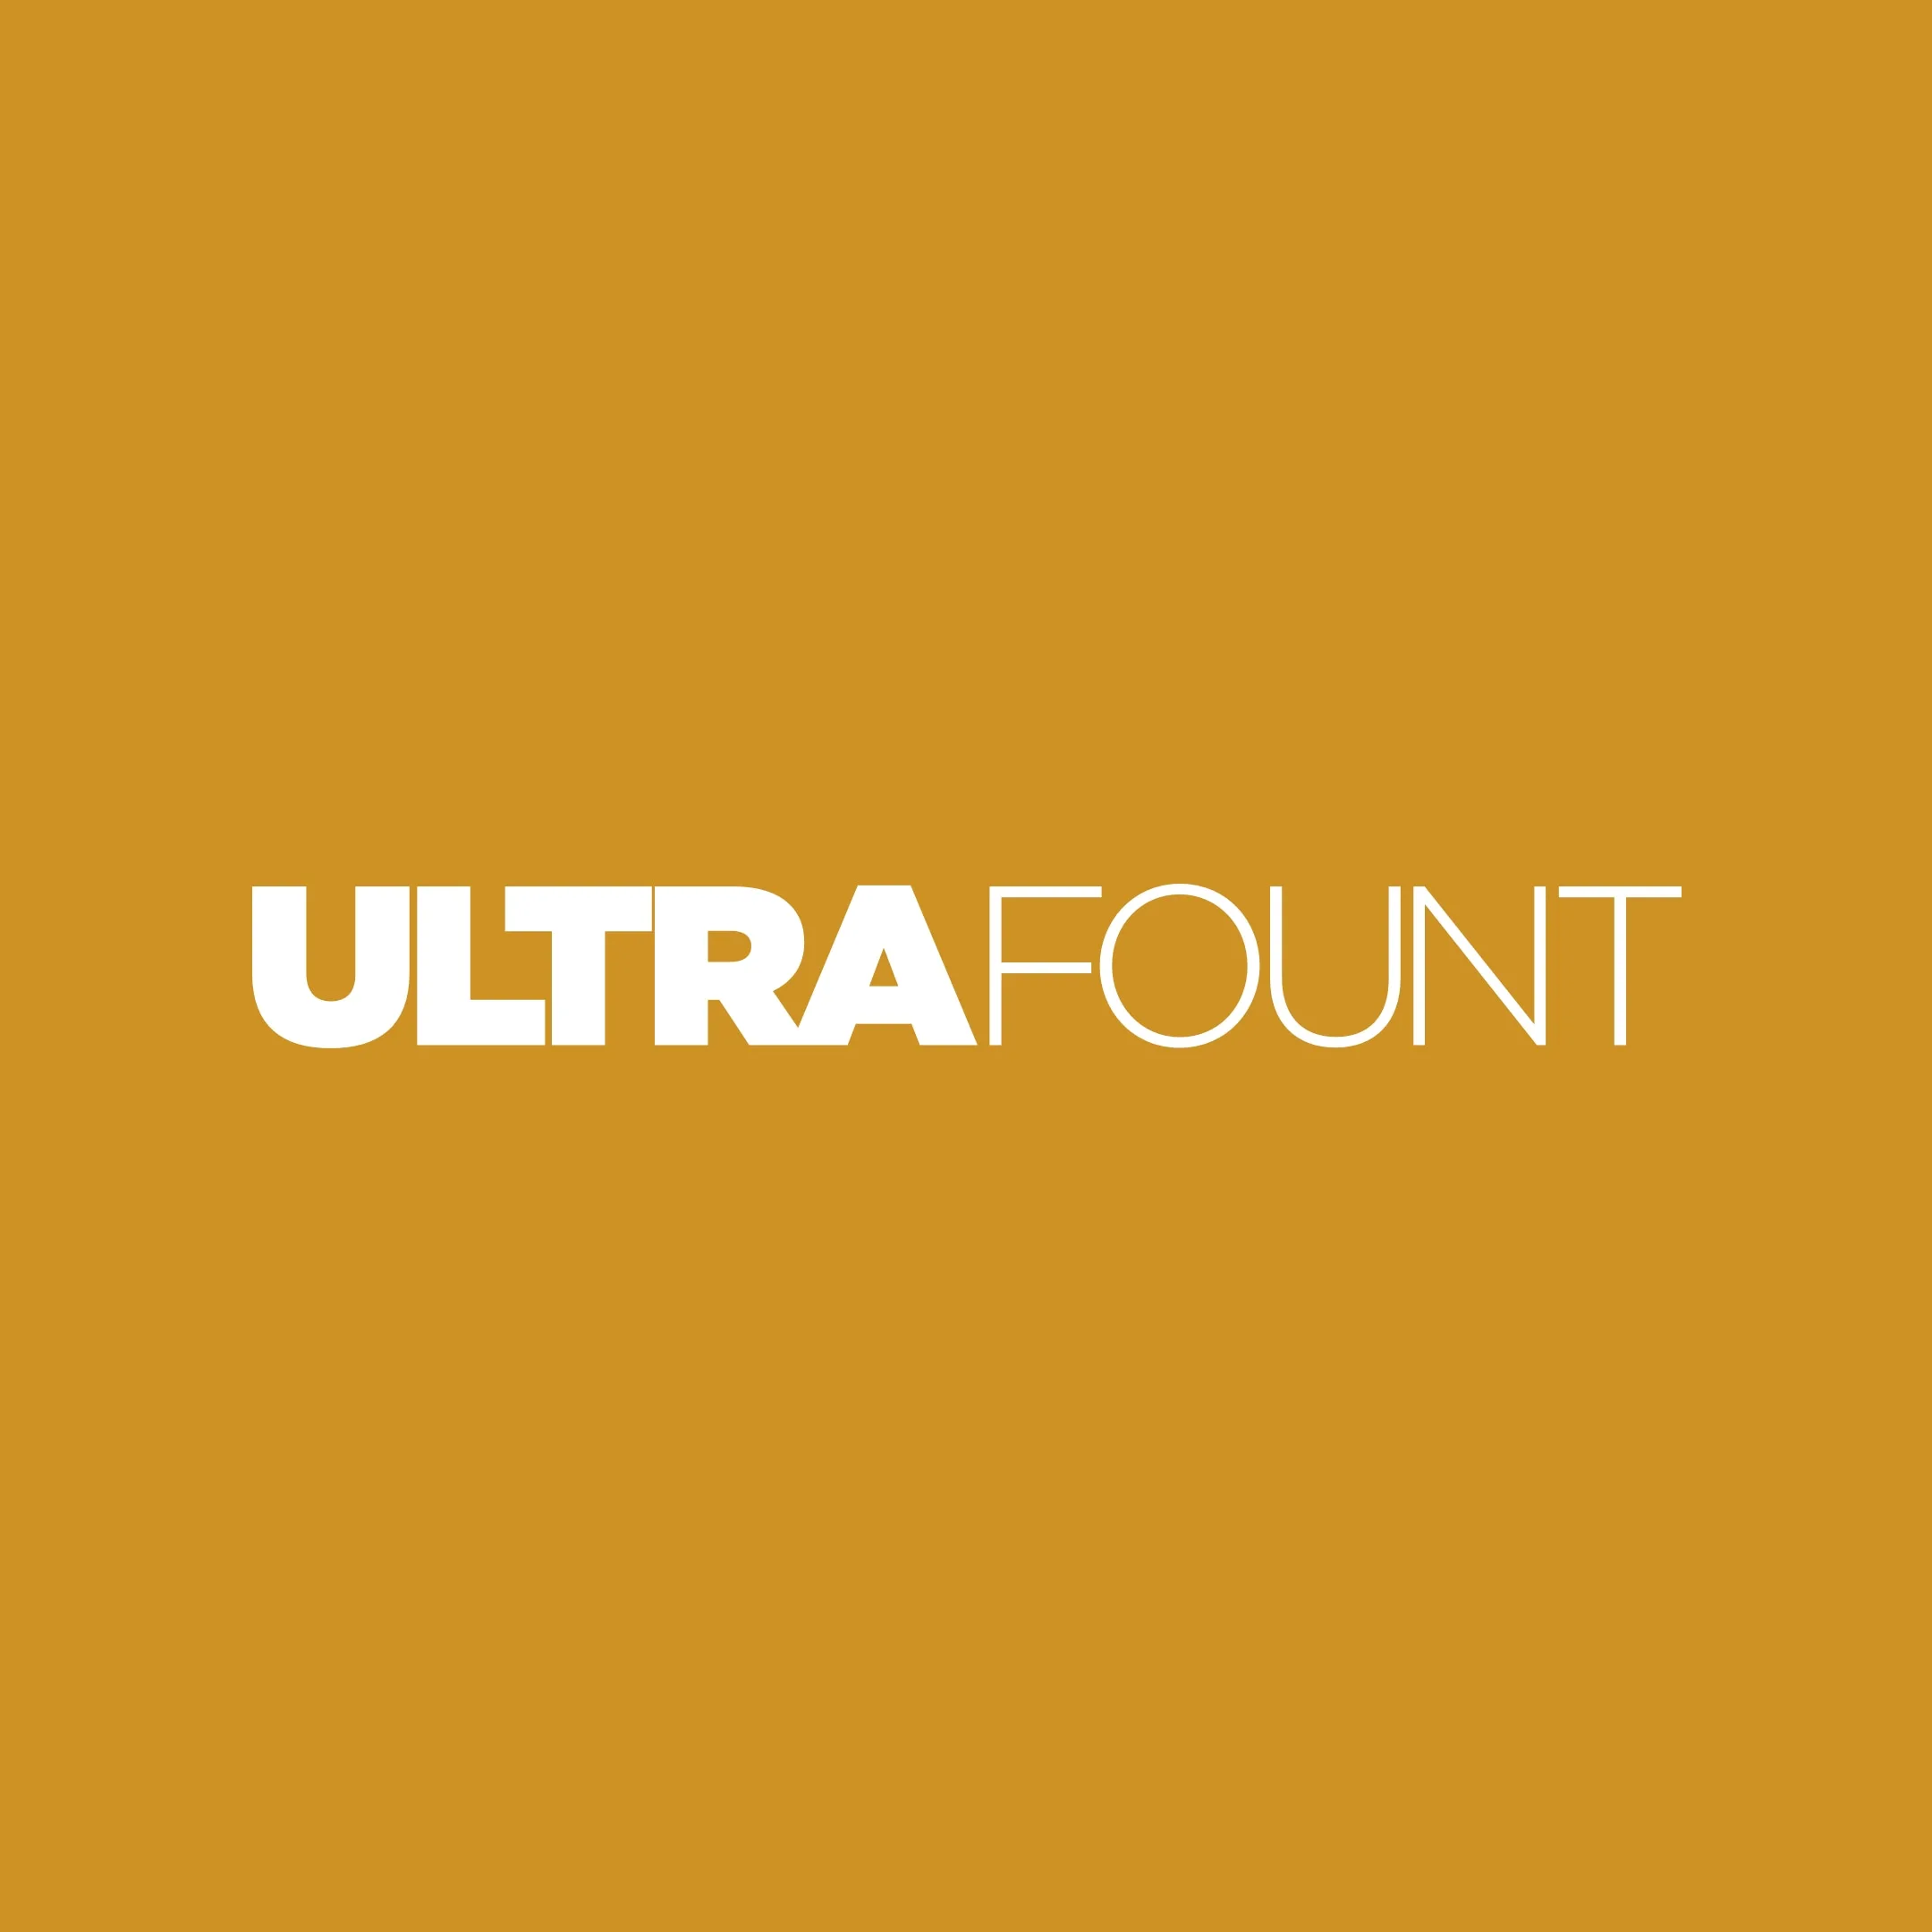 UltraFount logo